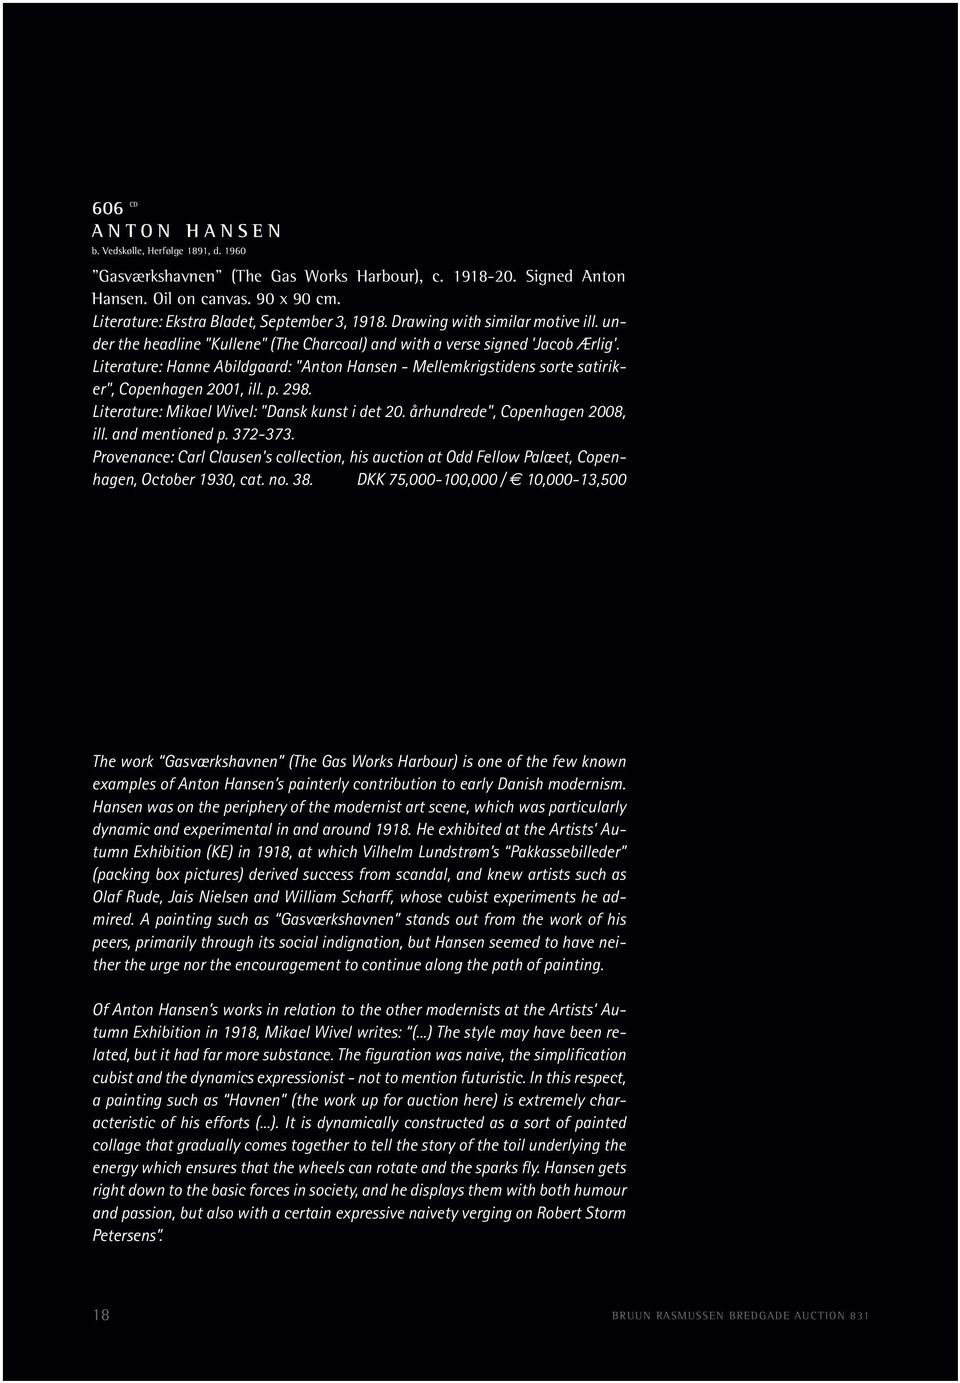 Literature: Hanne Abildgaard: "Anton Hansen - Mellemkrigstidens sorte satiriker", Copenhagen 2001, ill. p. 298. Literature: Mikael Wivel: "Dansk kunst i det 20. århundrede", Copenhagen 2008, ill.